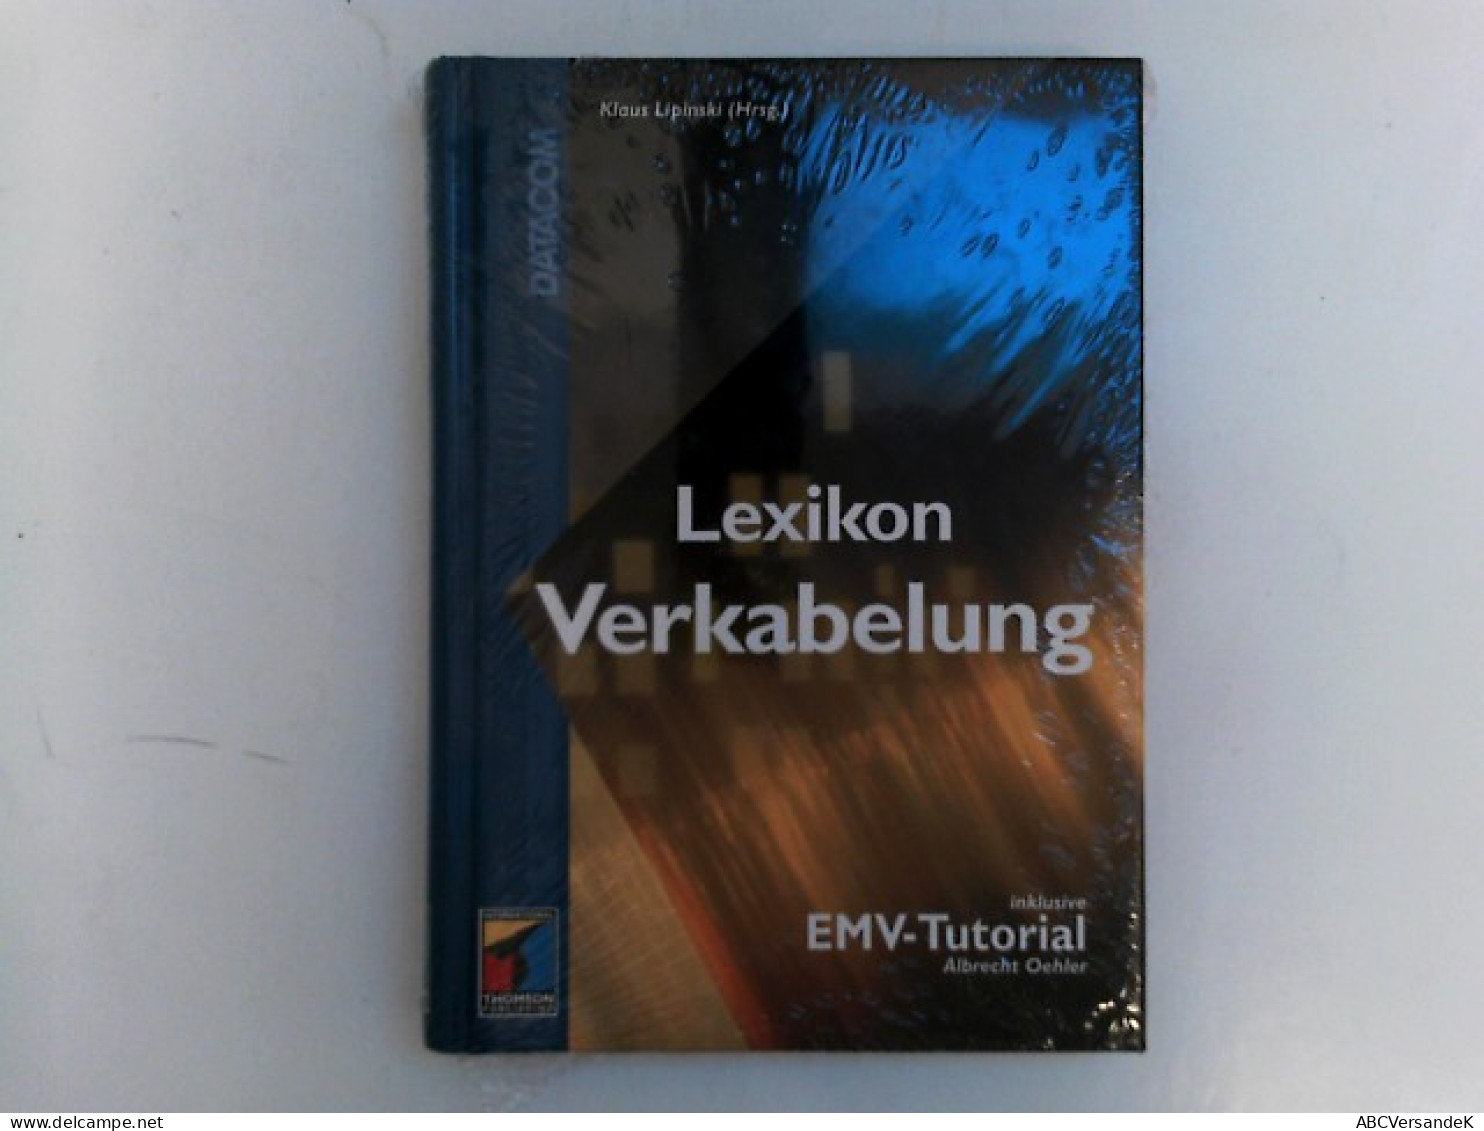 Lexikon Verkabelung. Inklusive EMV-Tutorial, Albrecht Oehler. - Technical